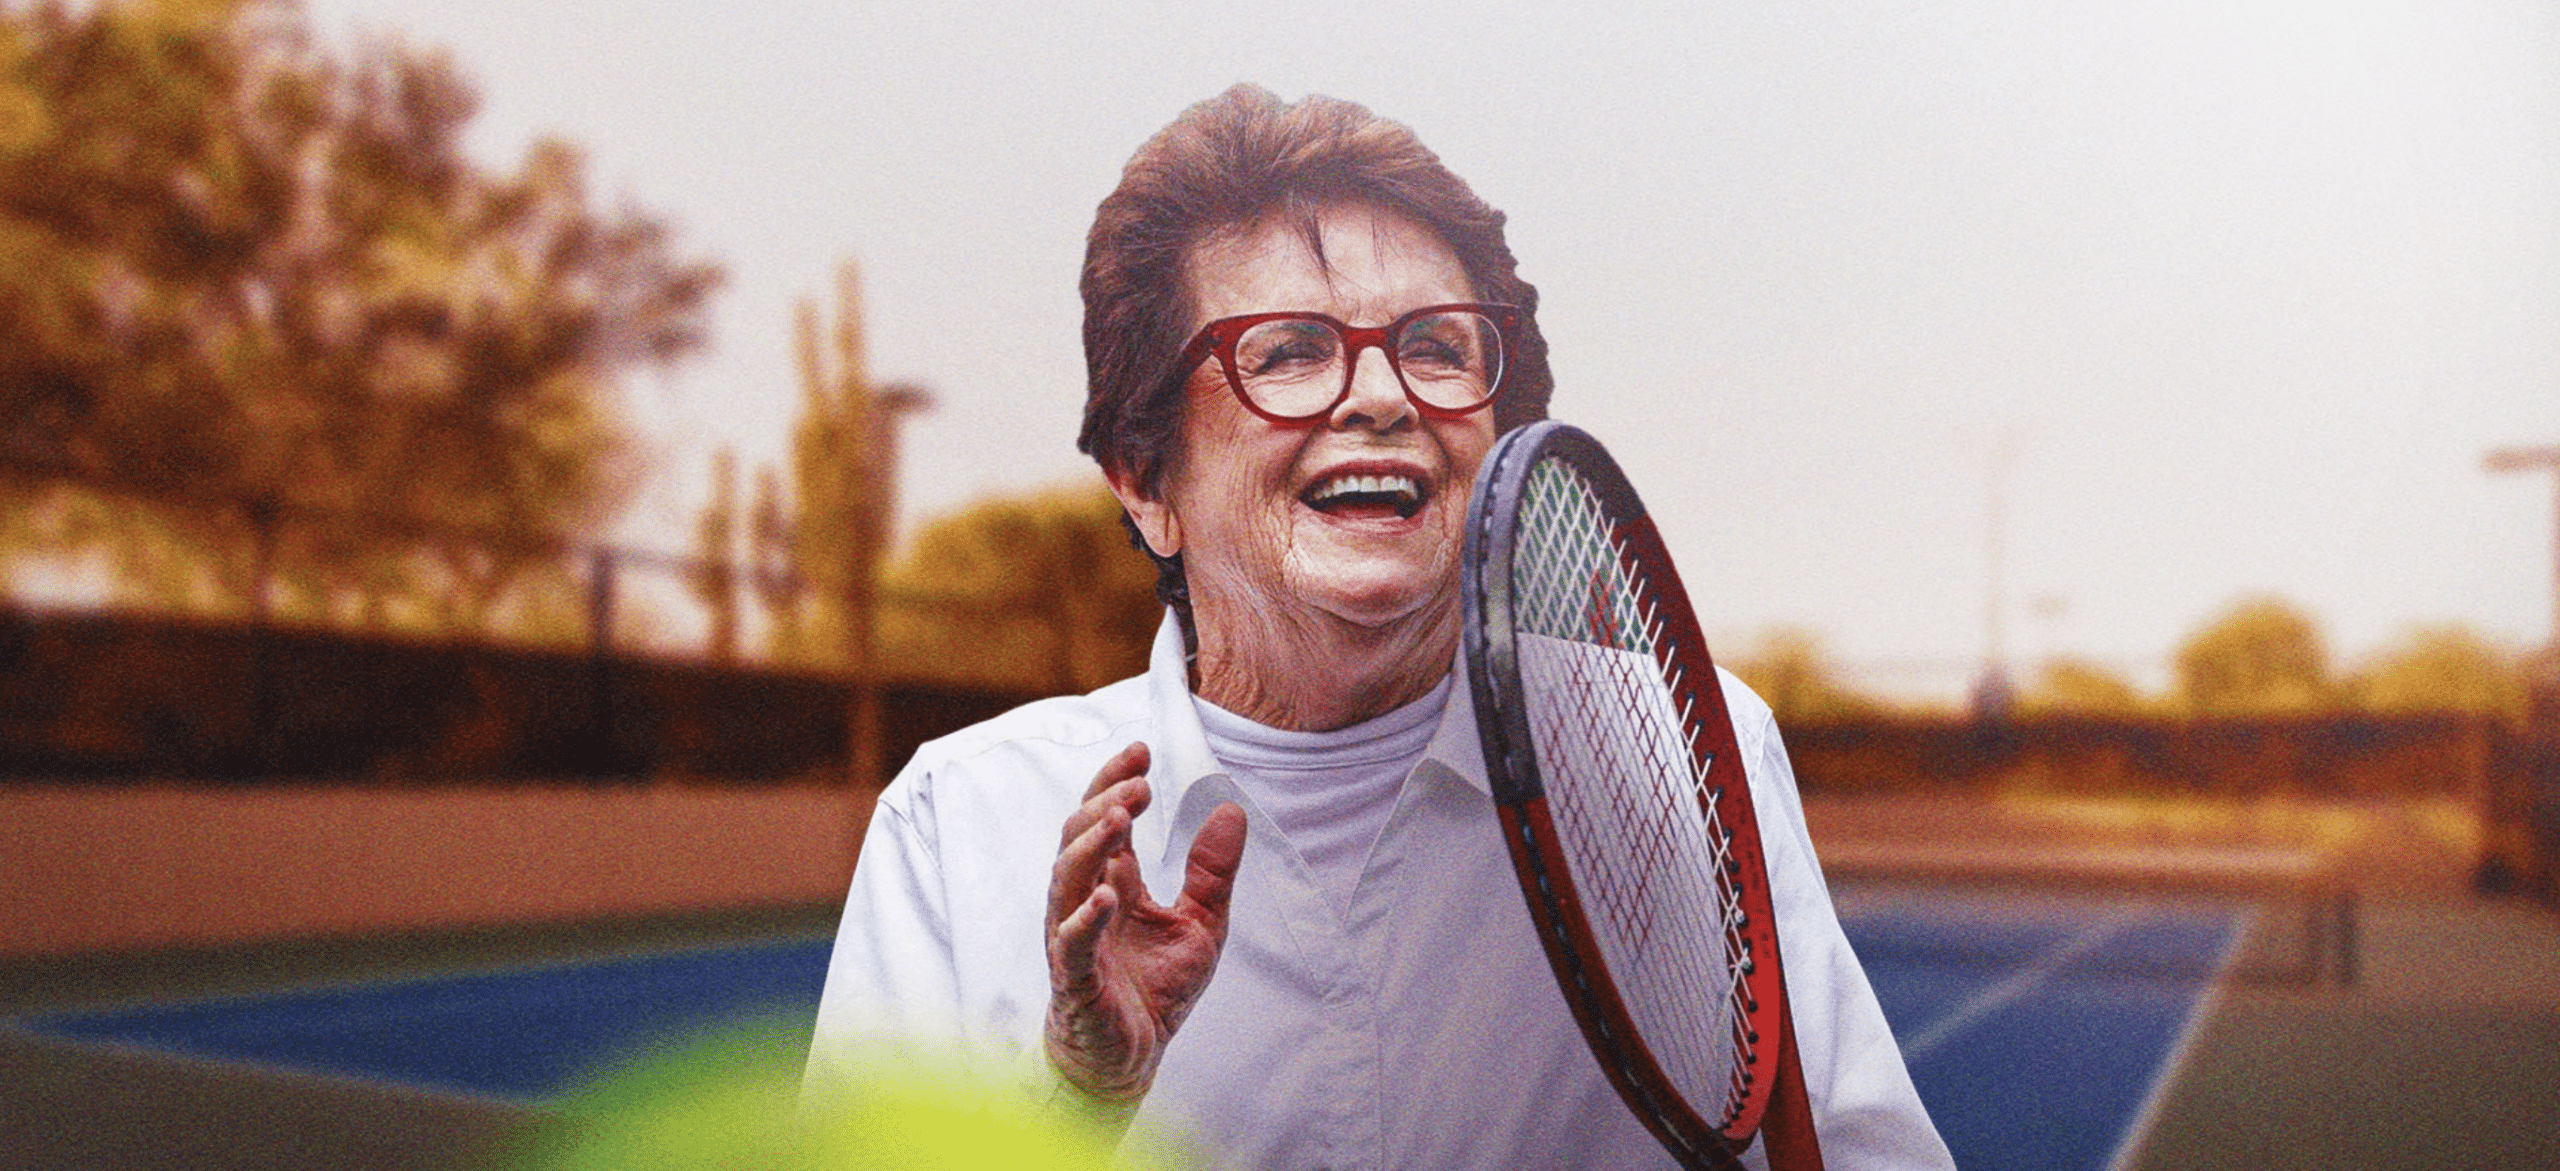 Billie Jean King reveals surprising support for Saudi tennis investment